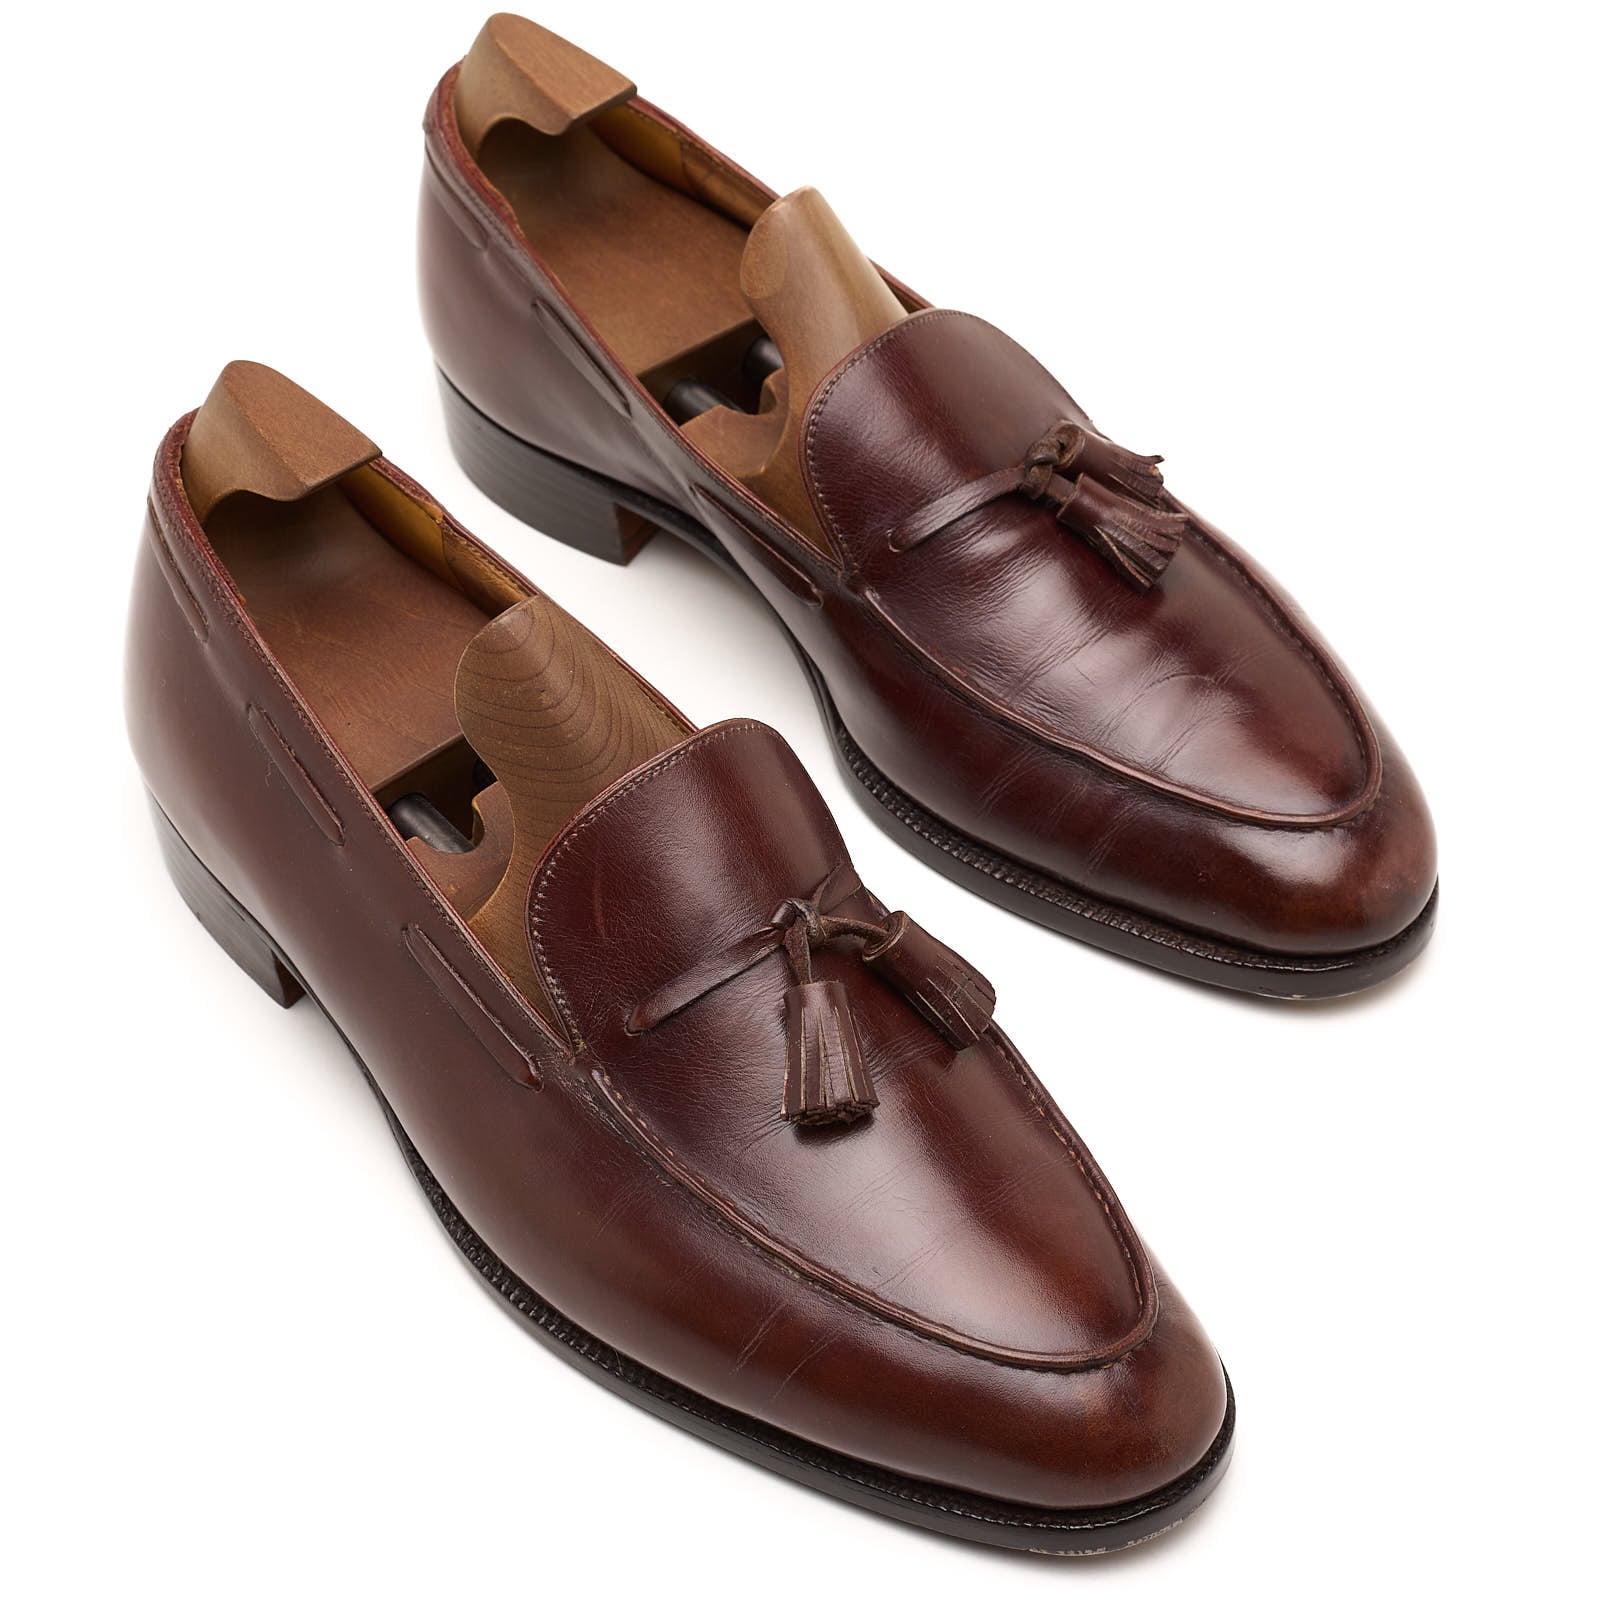 JOHN LOBB Bespoke Brown Tassel Loafers Shoes UK 6.5E US 7.5 Last 4515